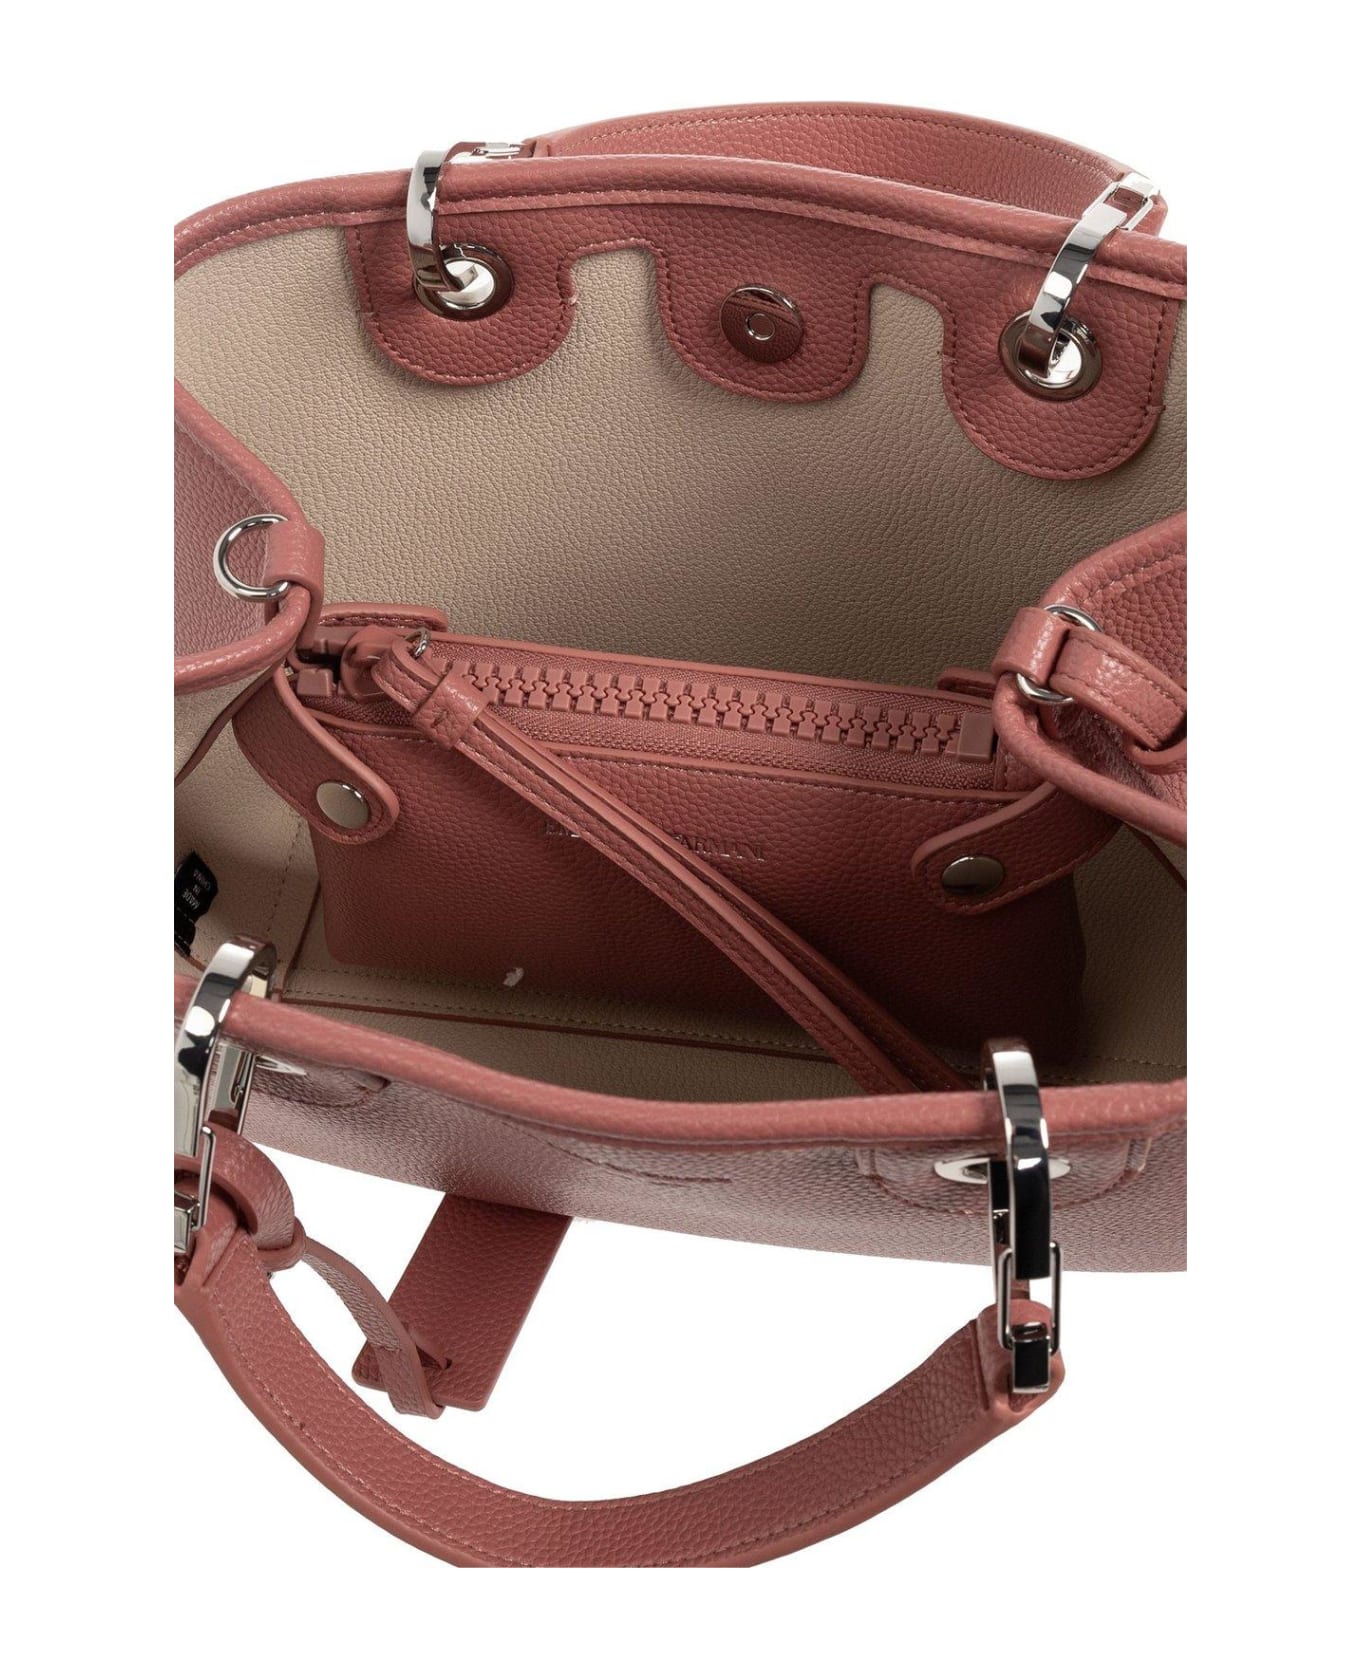 Emporio Armani Shopper Bag With Logo - Pink トートバッグ